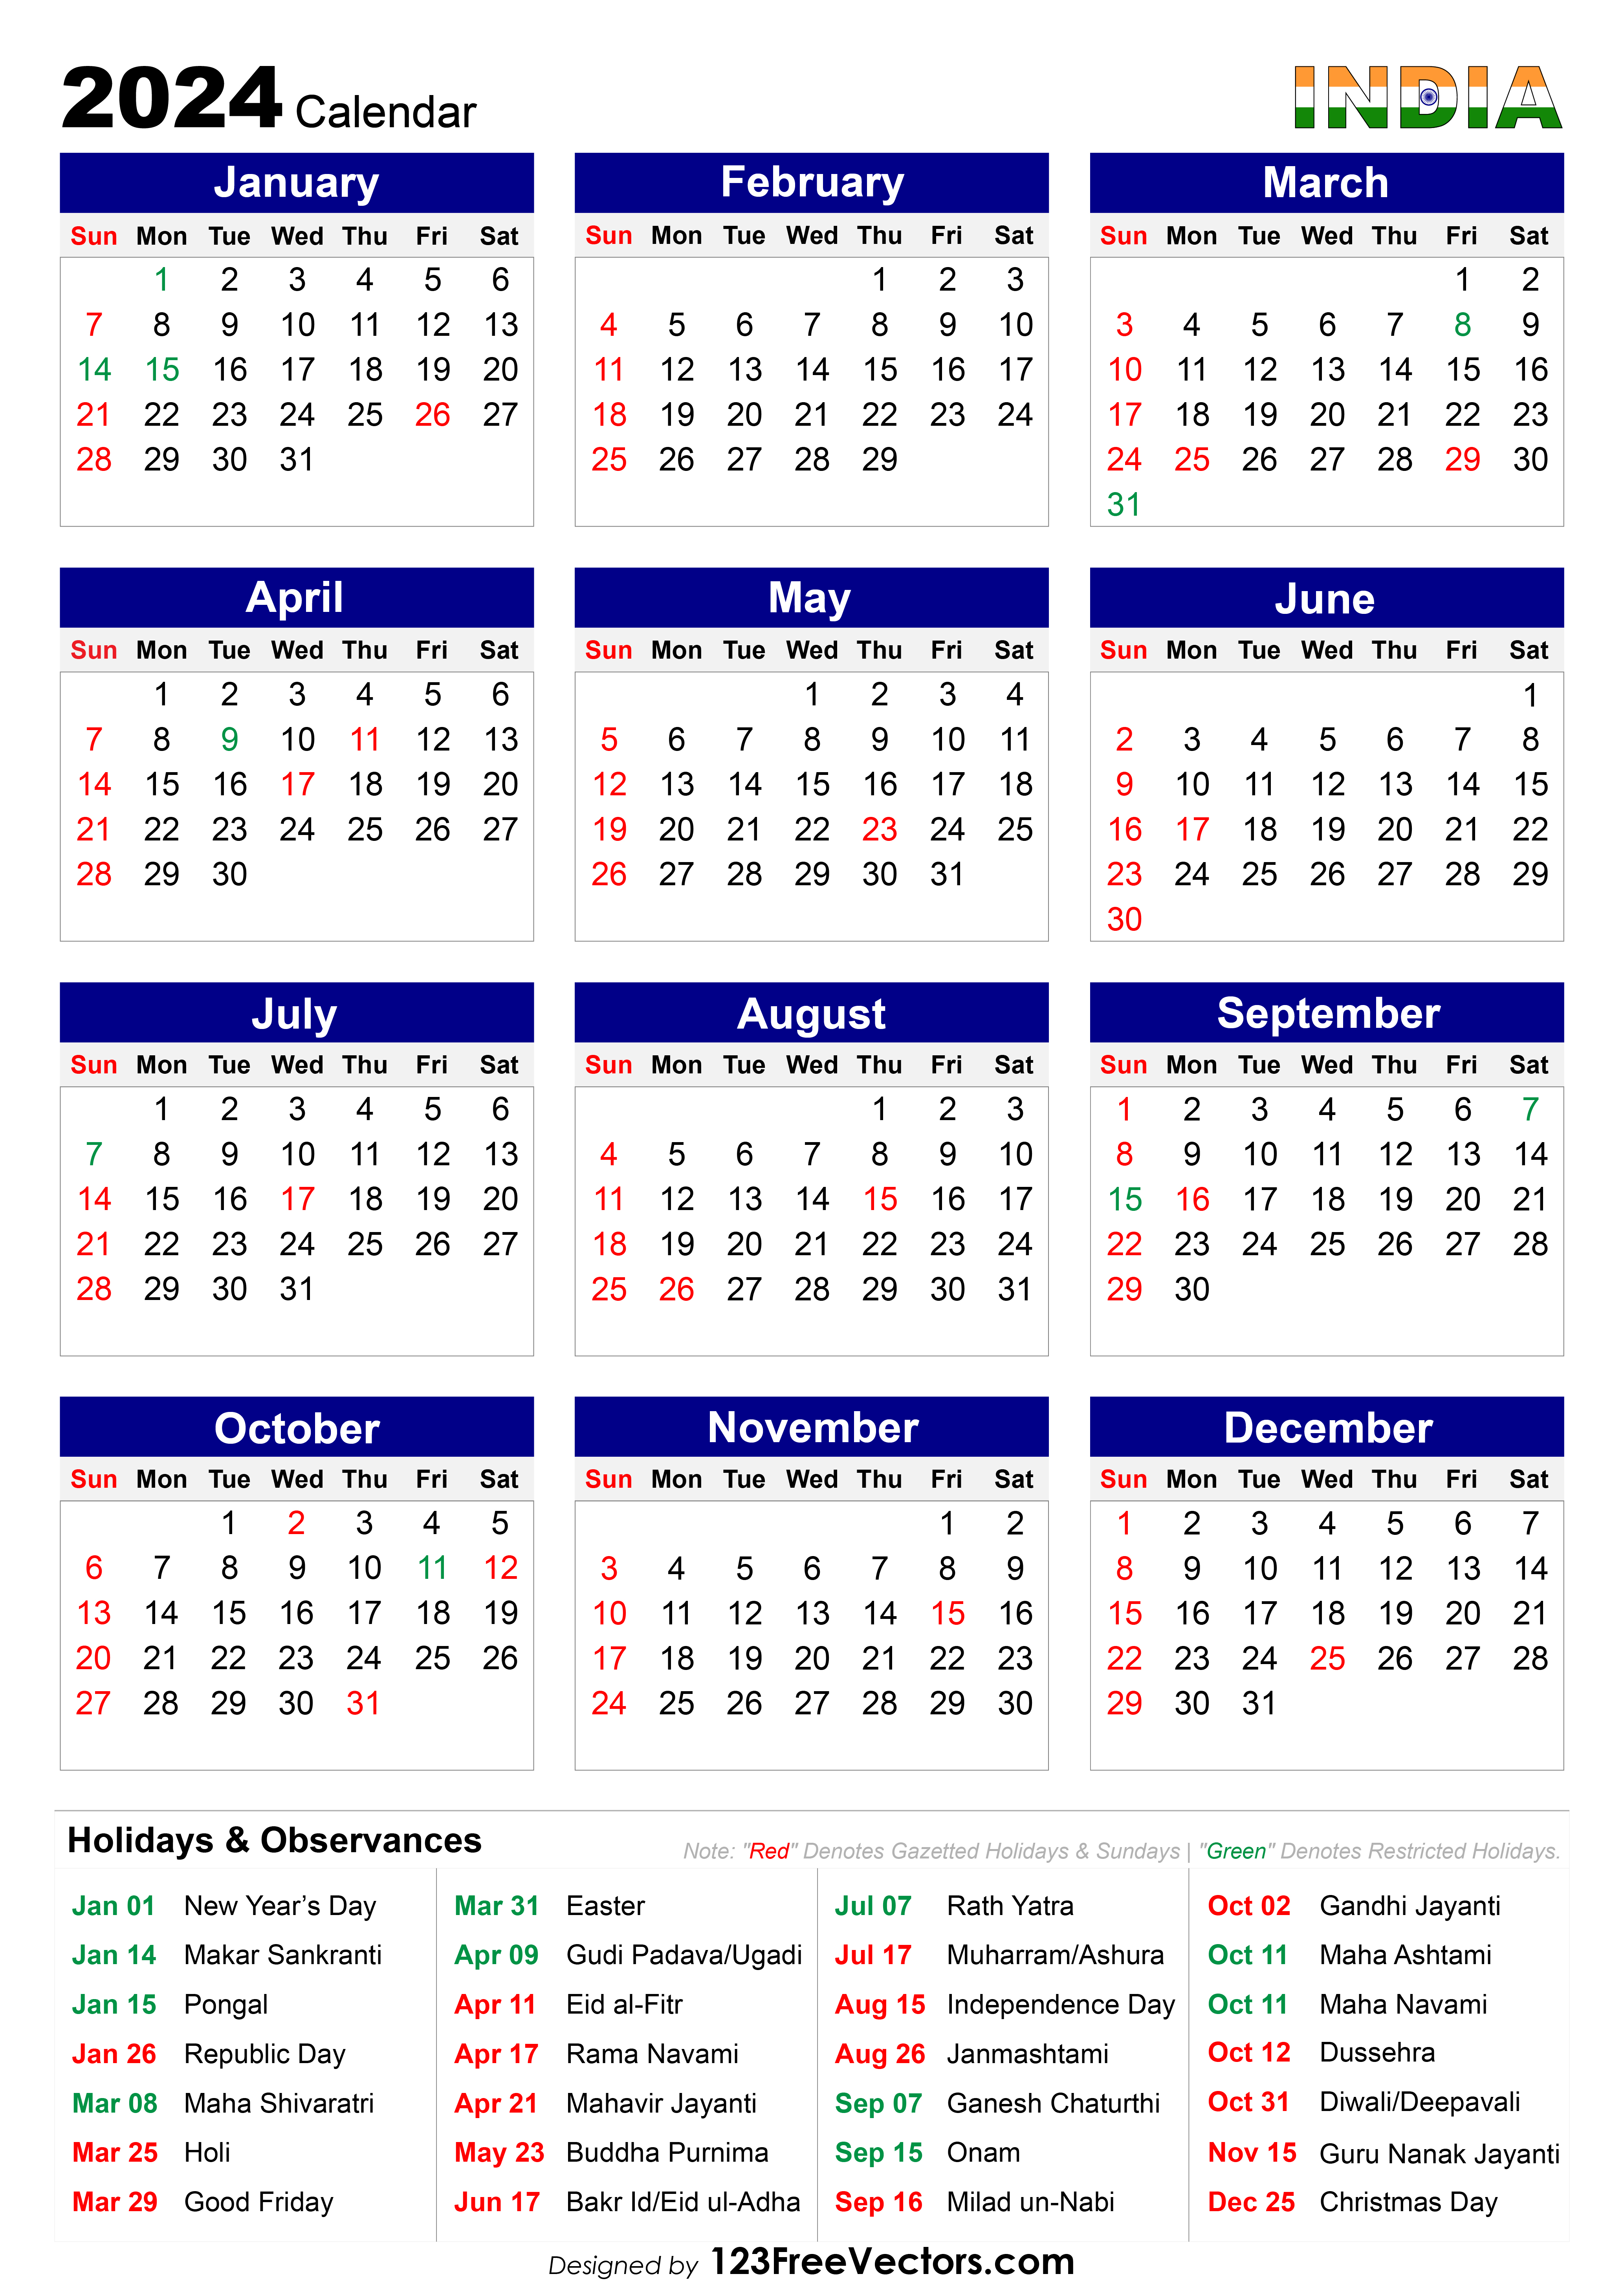 India Holiday Calendar 2024 August 2024 Calendar With Holidays